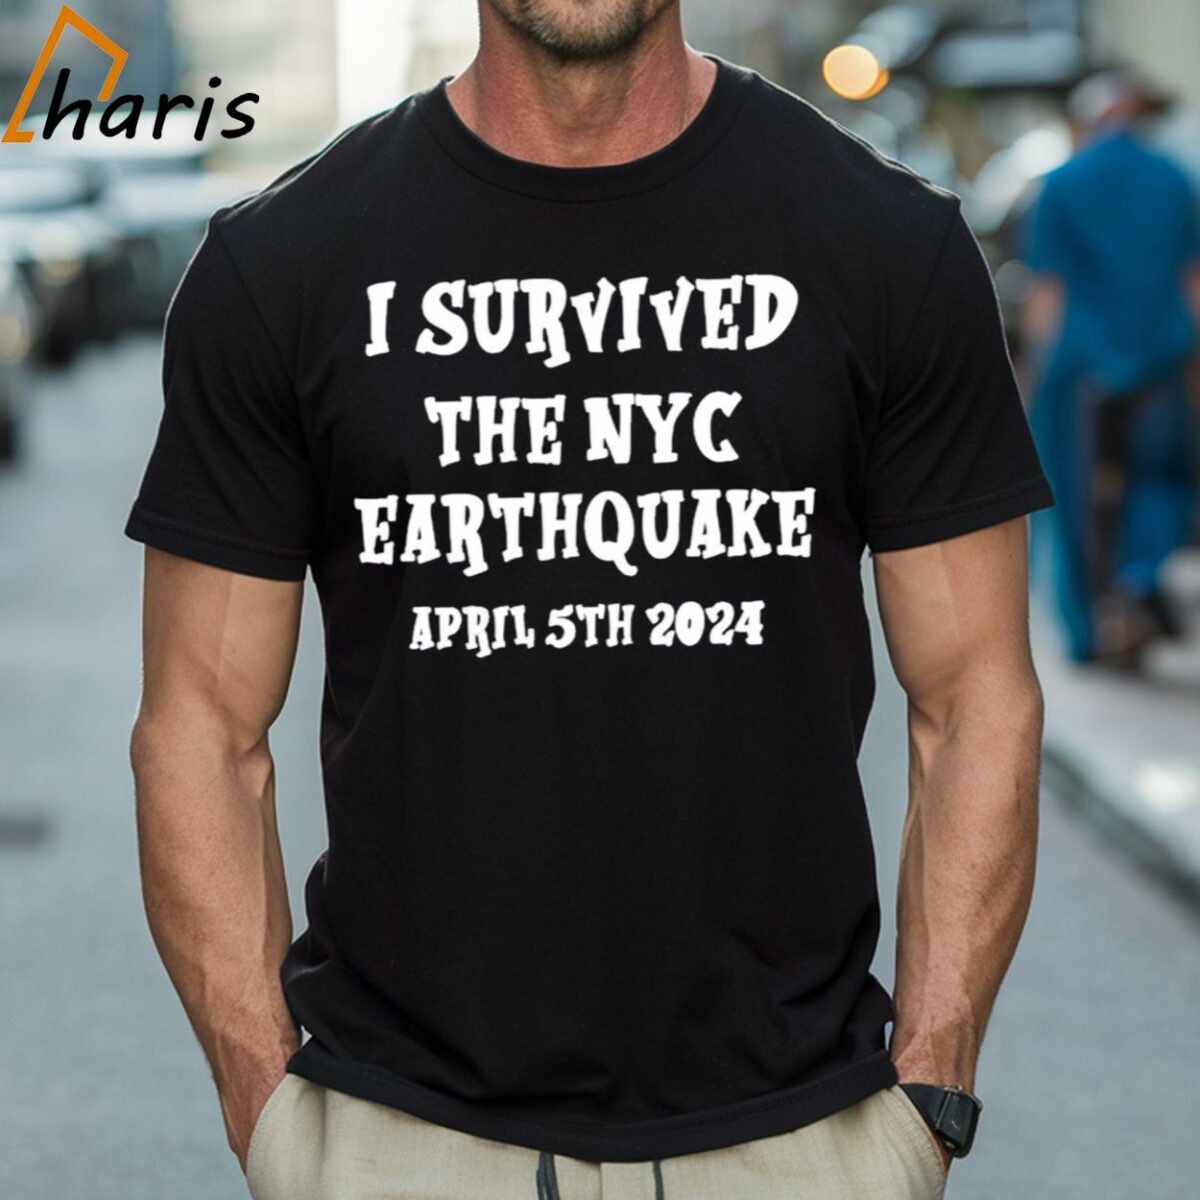 I Survived The NYC Earthquake T shirts 1 Shirt